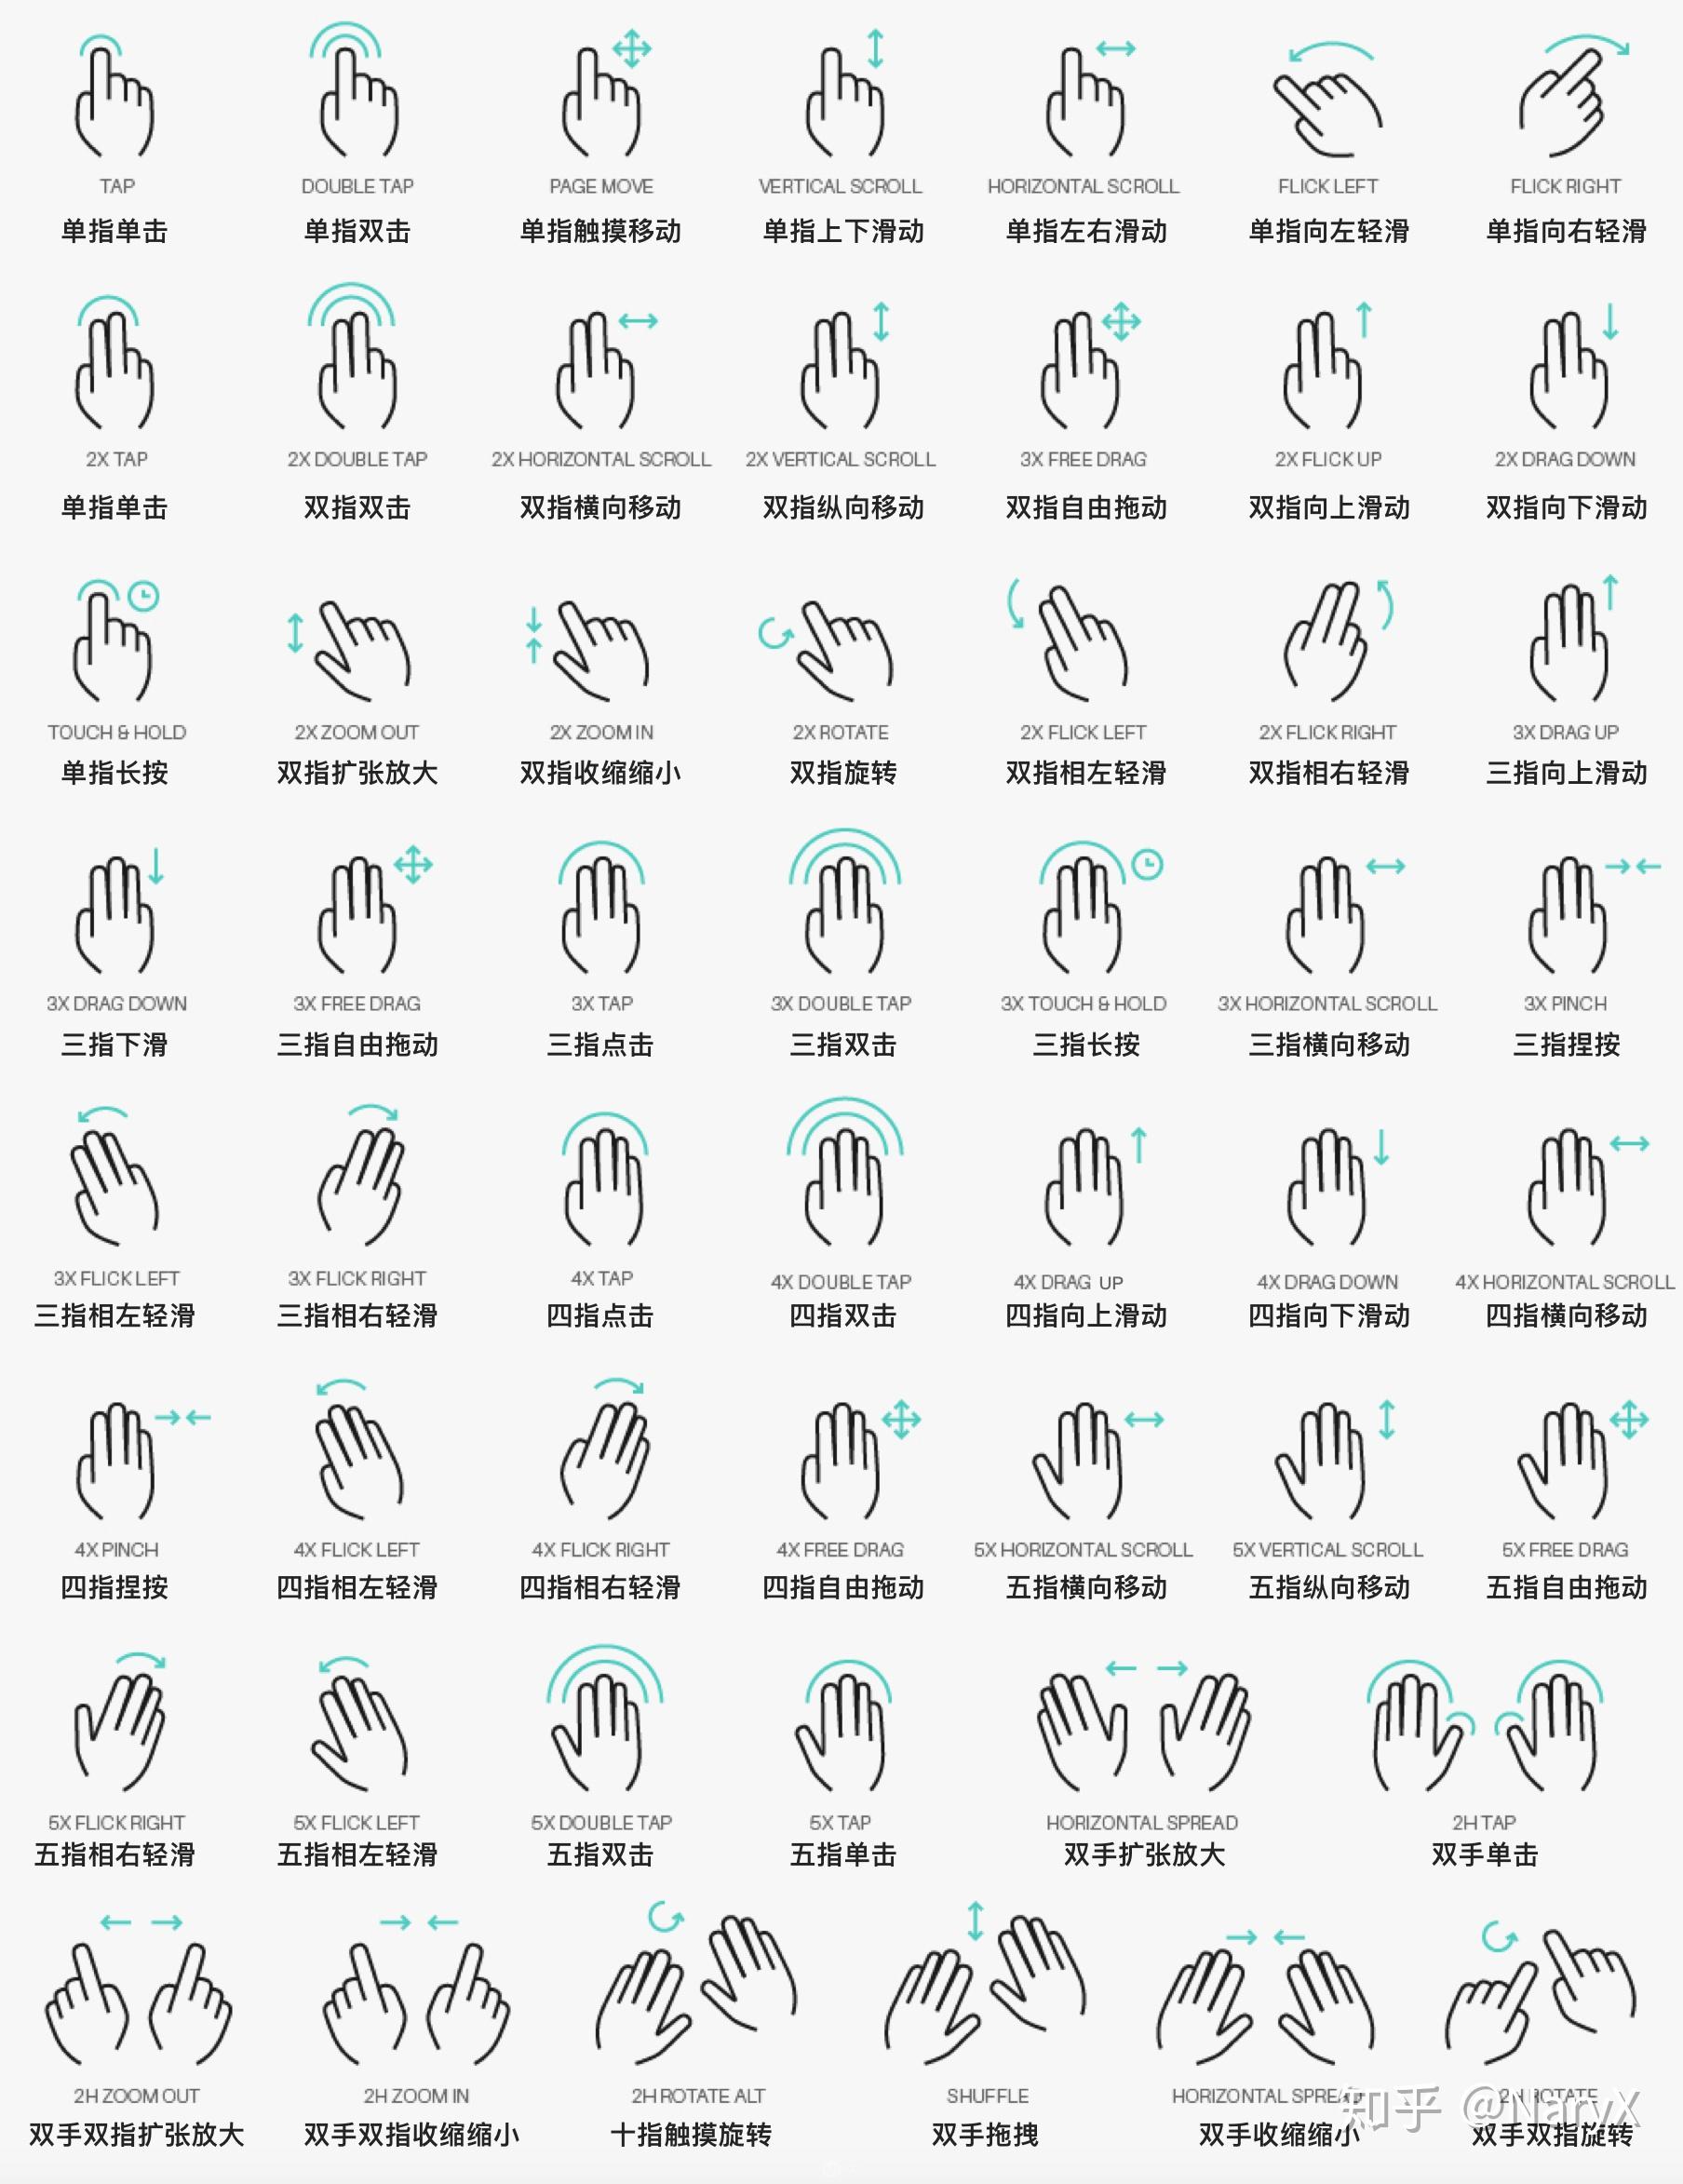 Hands emoji gestures icons ~ Illustrations ~ Creative Market